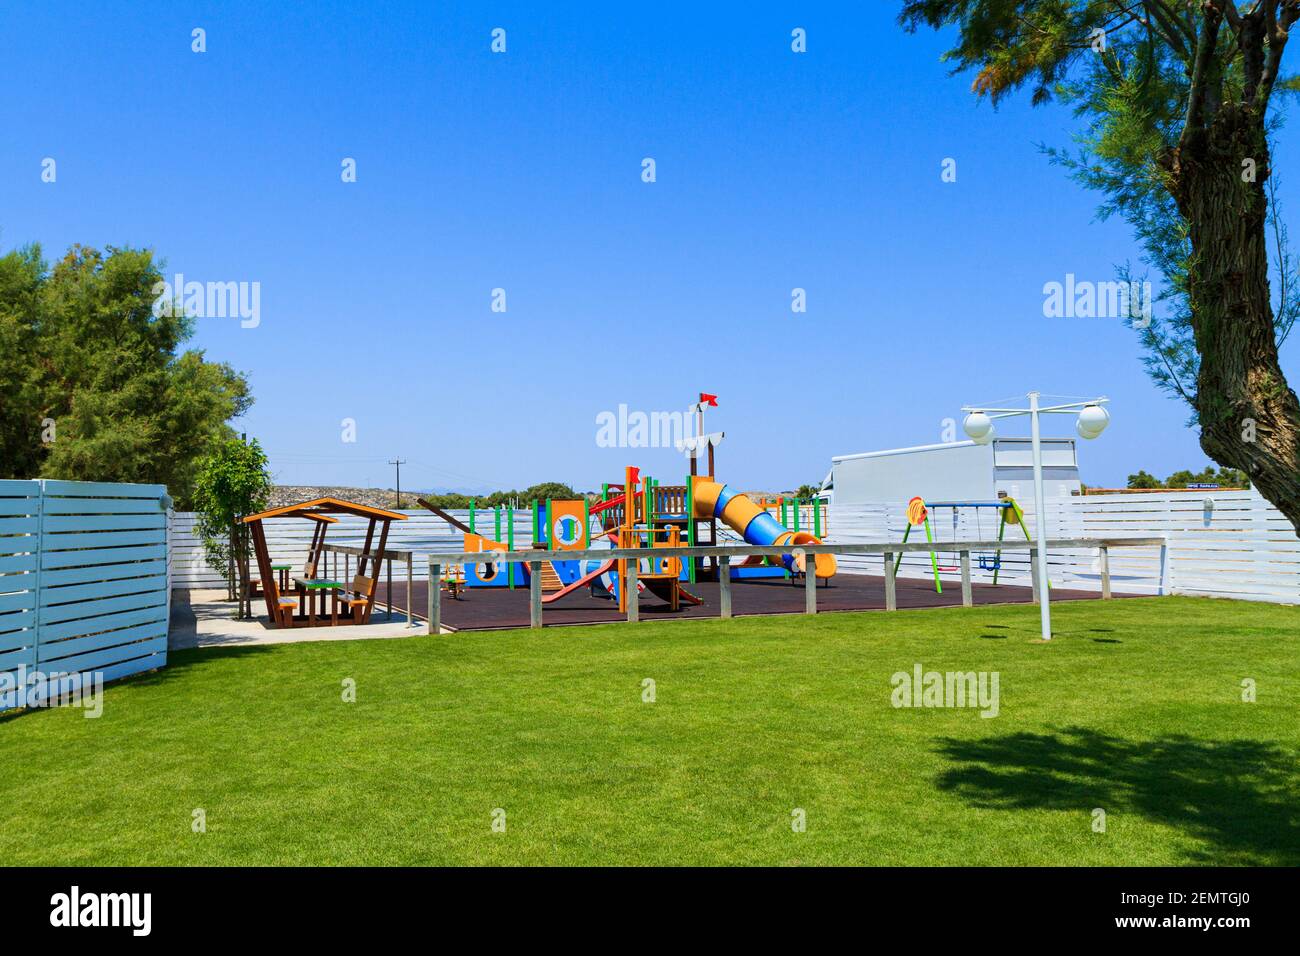 Children's wooden playground recreation area at public park Stock Photo